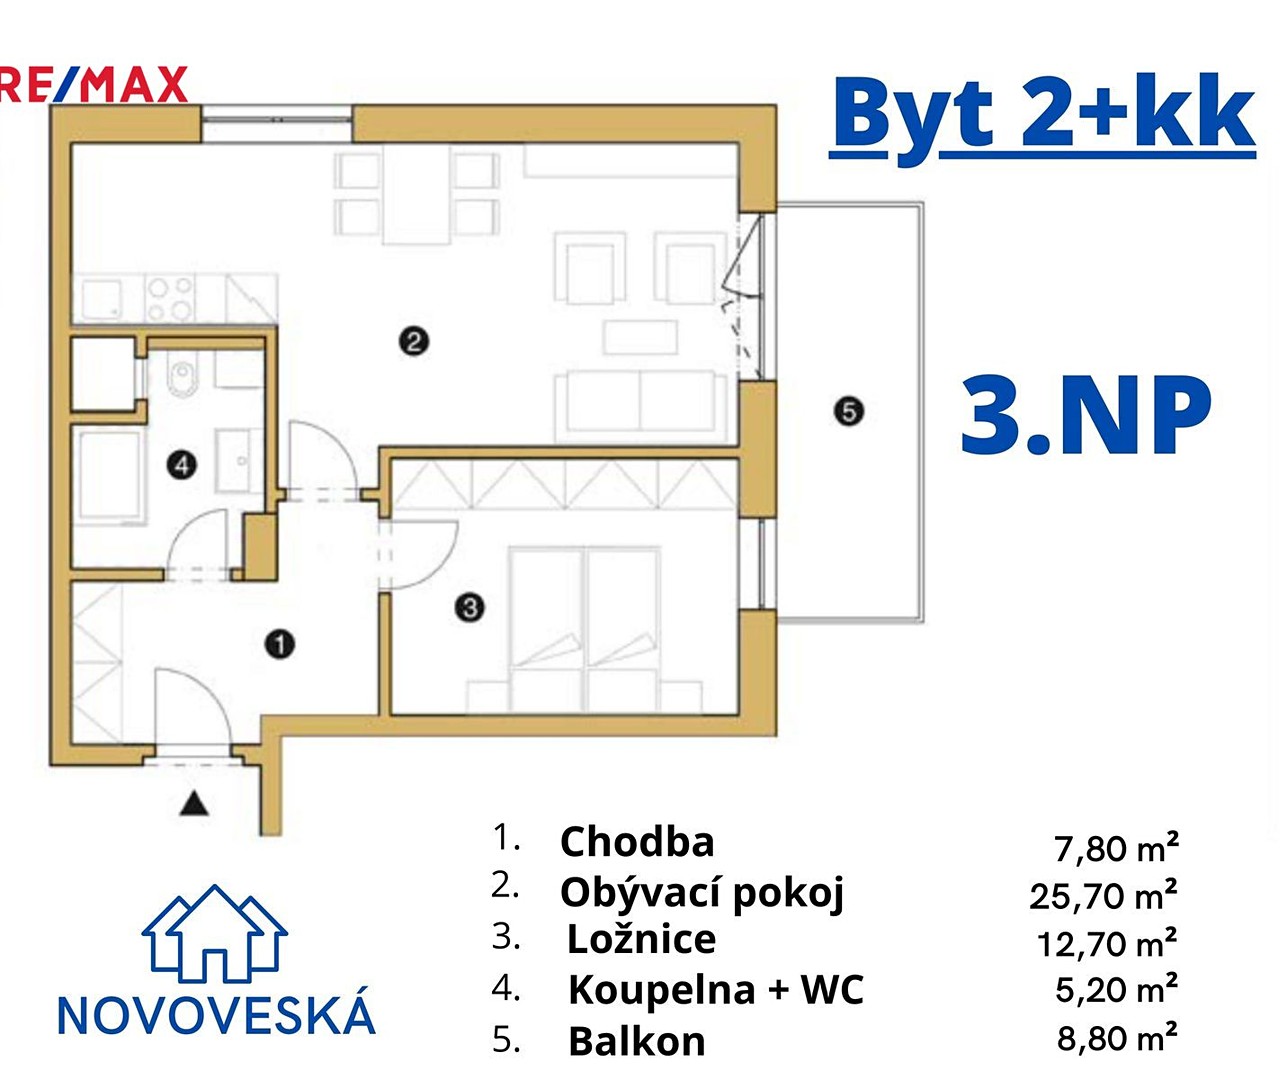 Prodej bytu 2+kk 58 m² (Mezonet), Teplice, okres Teplice